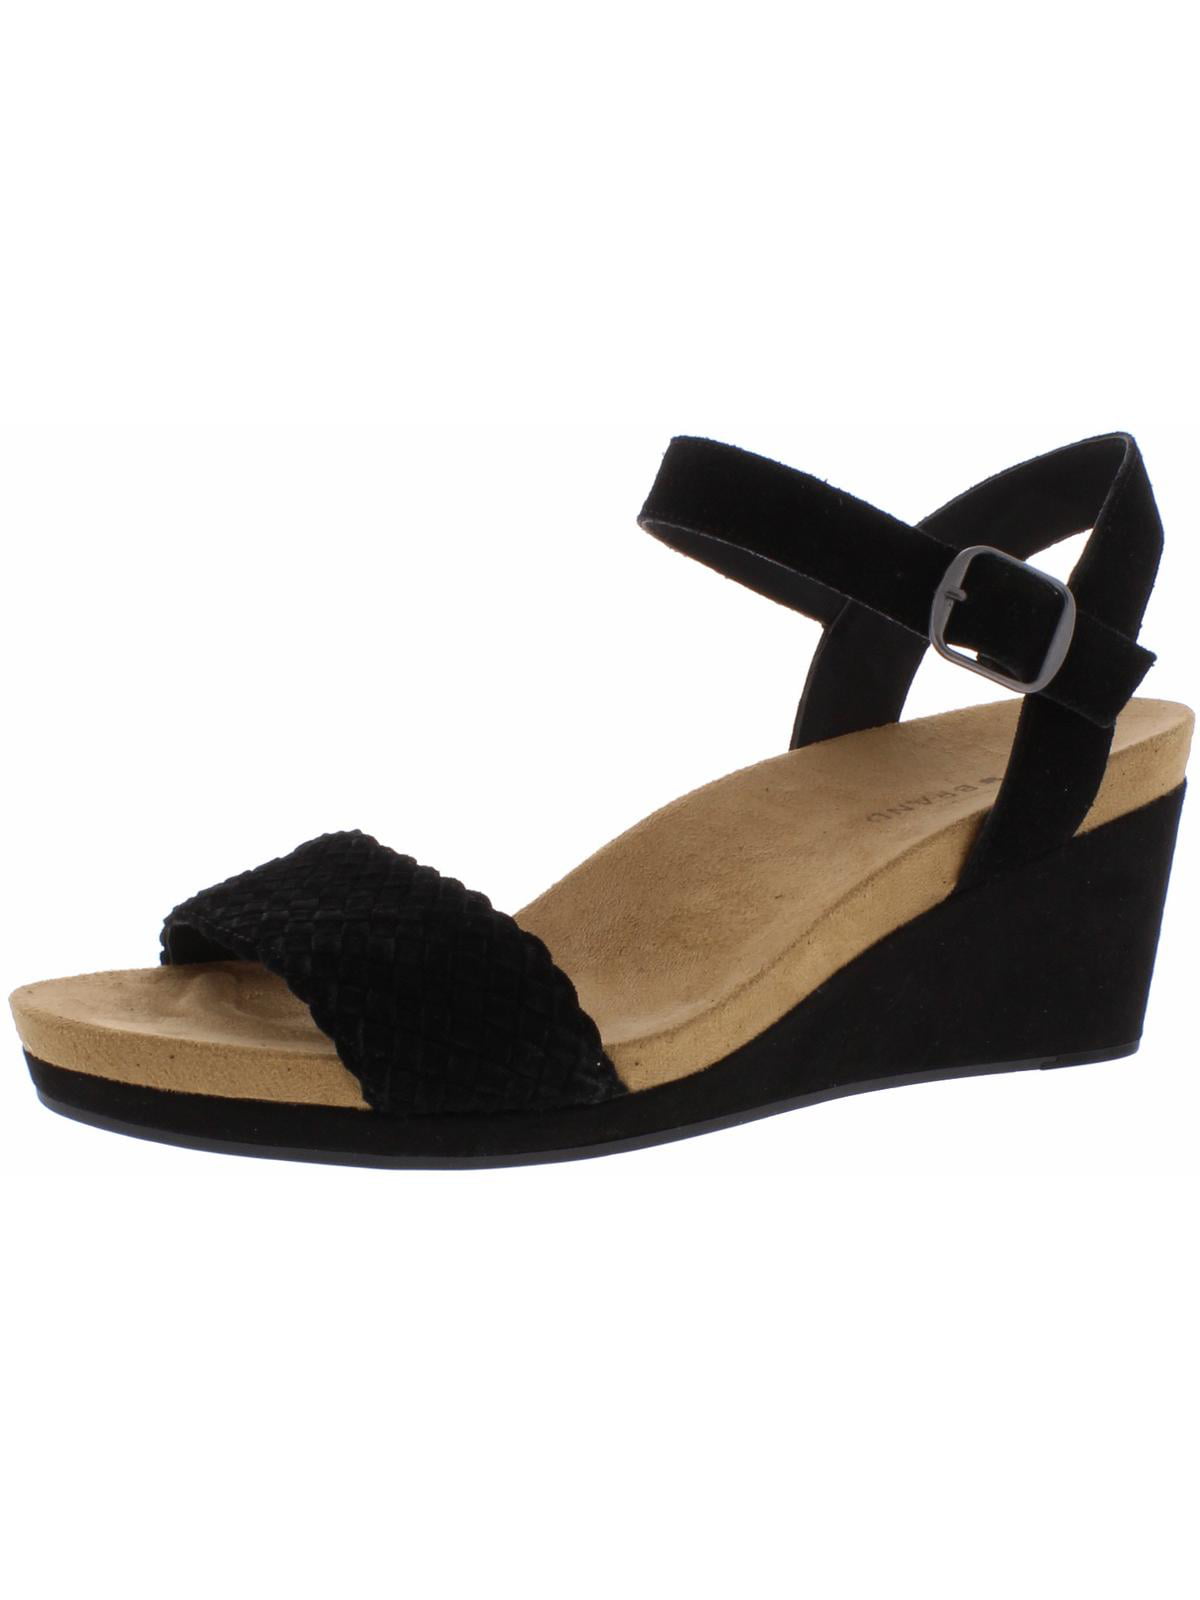 Lucky Brand Womens Kenette Suede Open Toe Wedge Sandals - Walmart.com